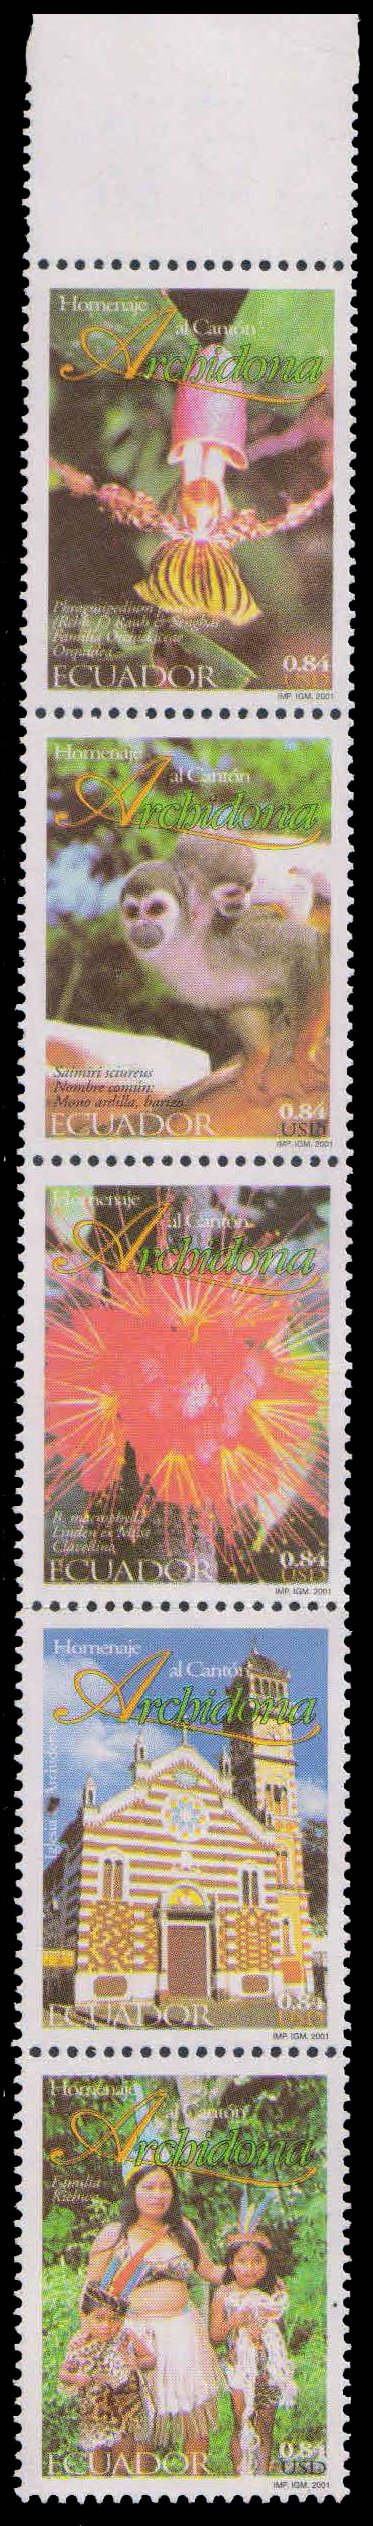 ECUADOR 2001-Archidona Canton, Napo Province, Flower, Animal, People, Church, Set of 5, MNH, S.G. 2481-85-Cat £ 42.50